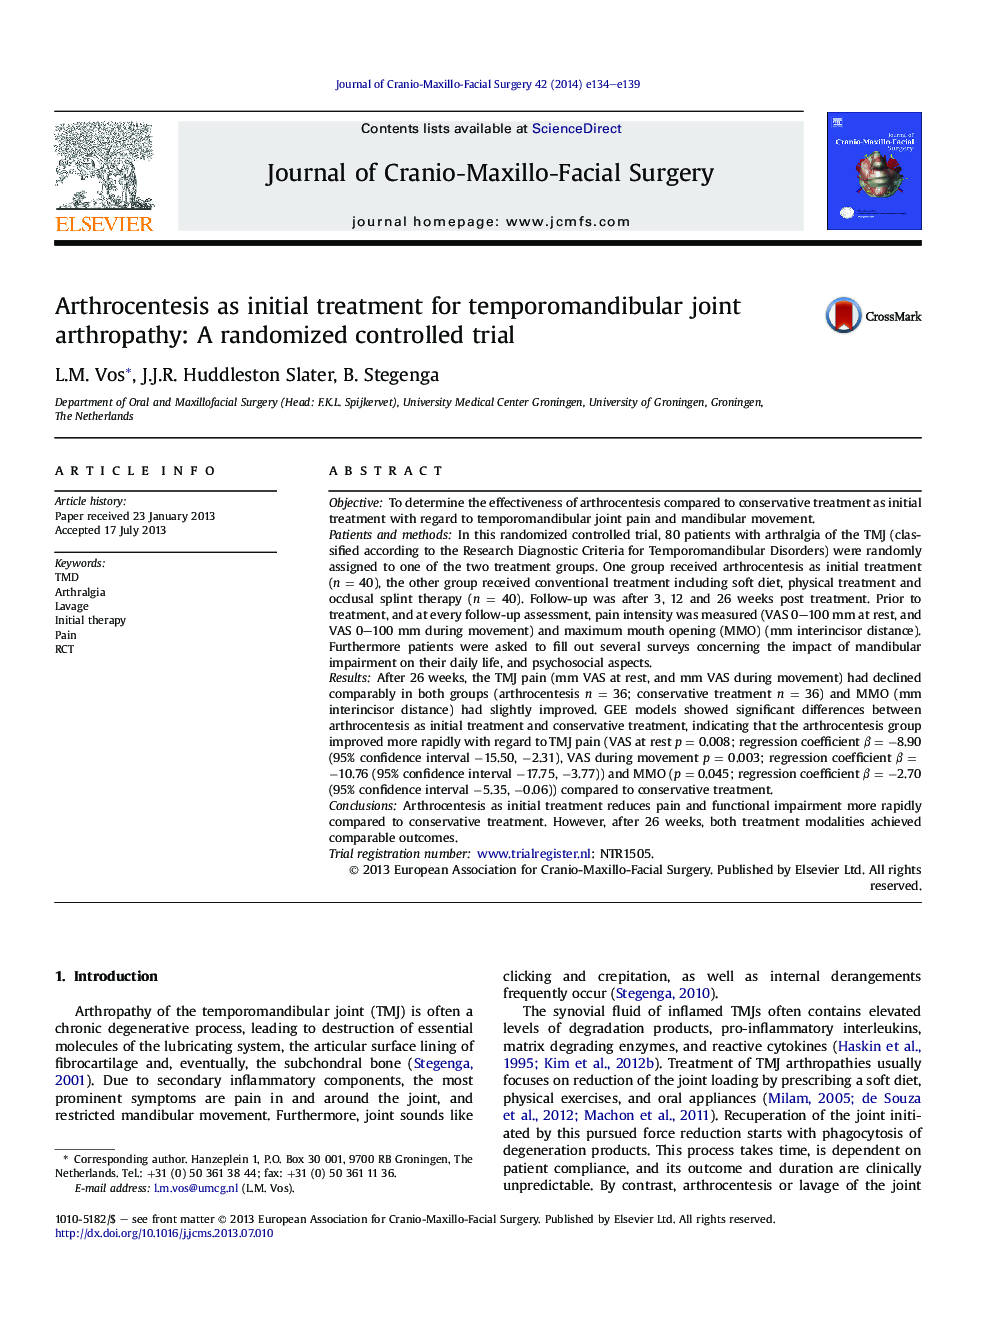 Arthrocentesis as initial treatment for temporomandibular joint arthropathy: A randomized controlled trial